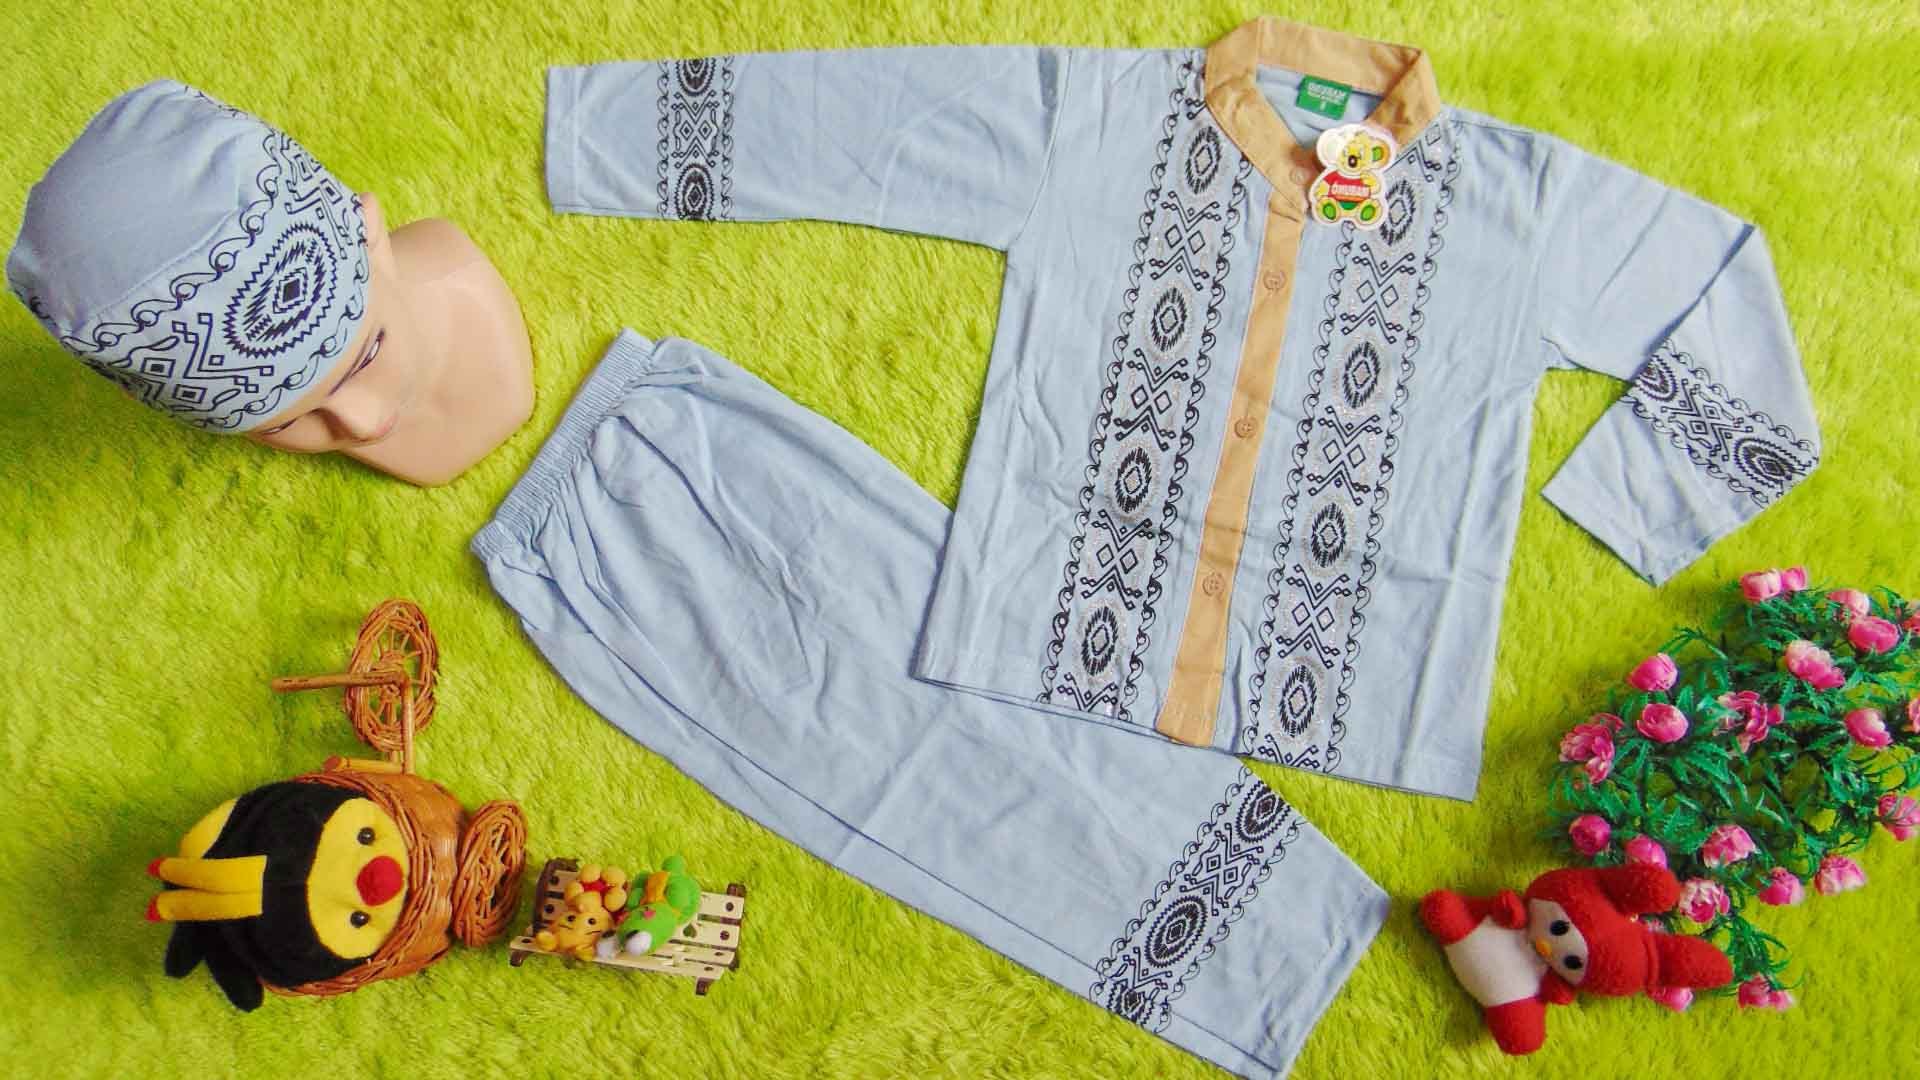 Ide Baju Lebaran Anak 2 Tahun Gdd0 Paling Laris Setelan Baju Koko Muslim Lebaran Ramadhan